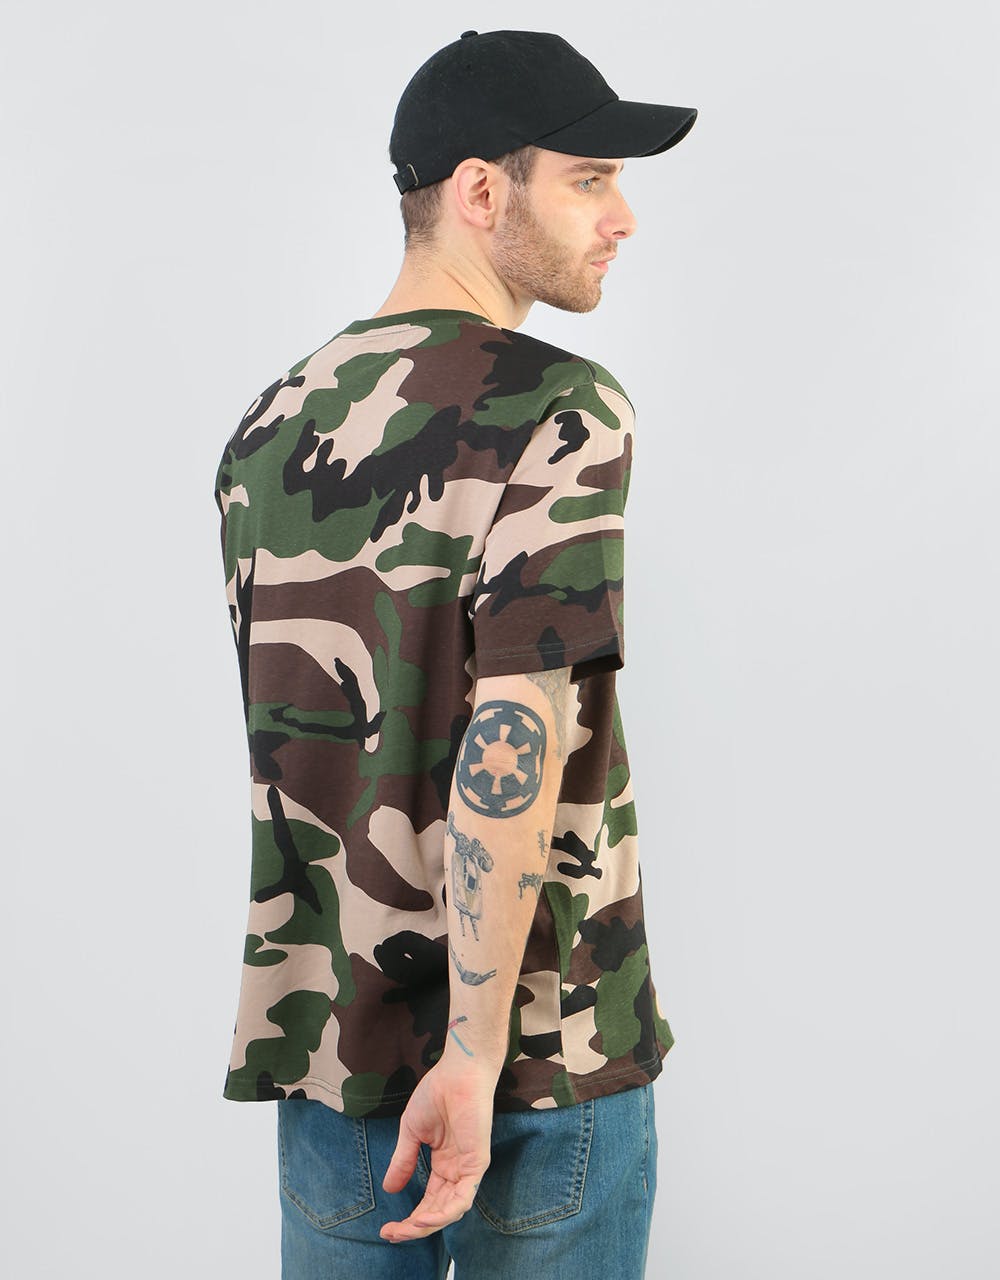 Dickies Horseshoe T-Shirt - Camouflage